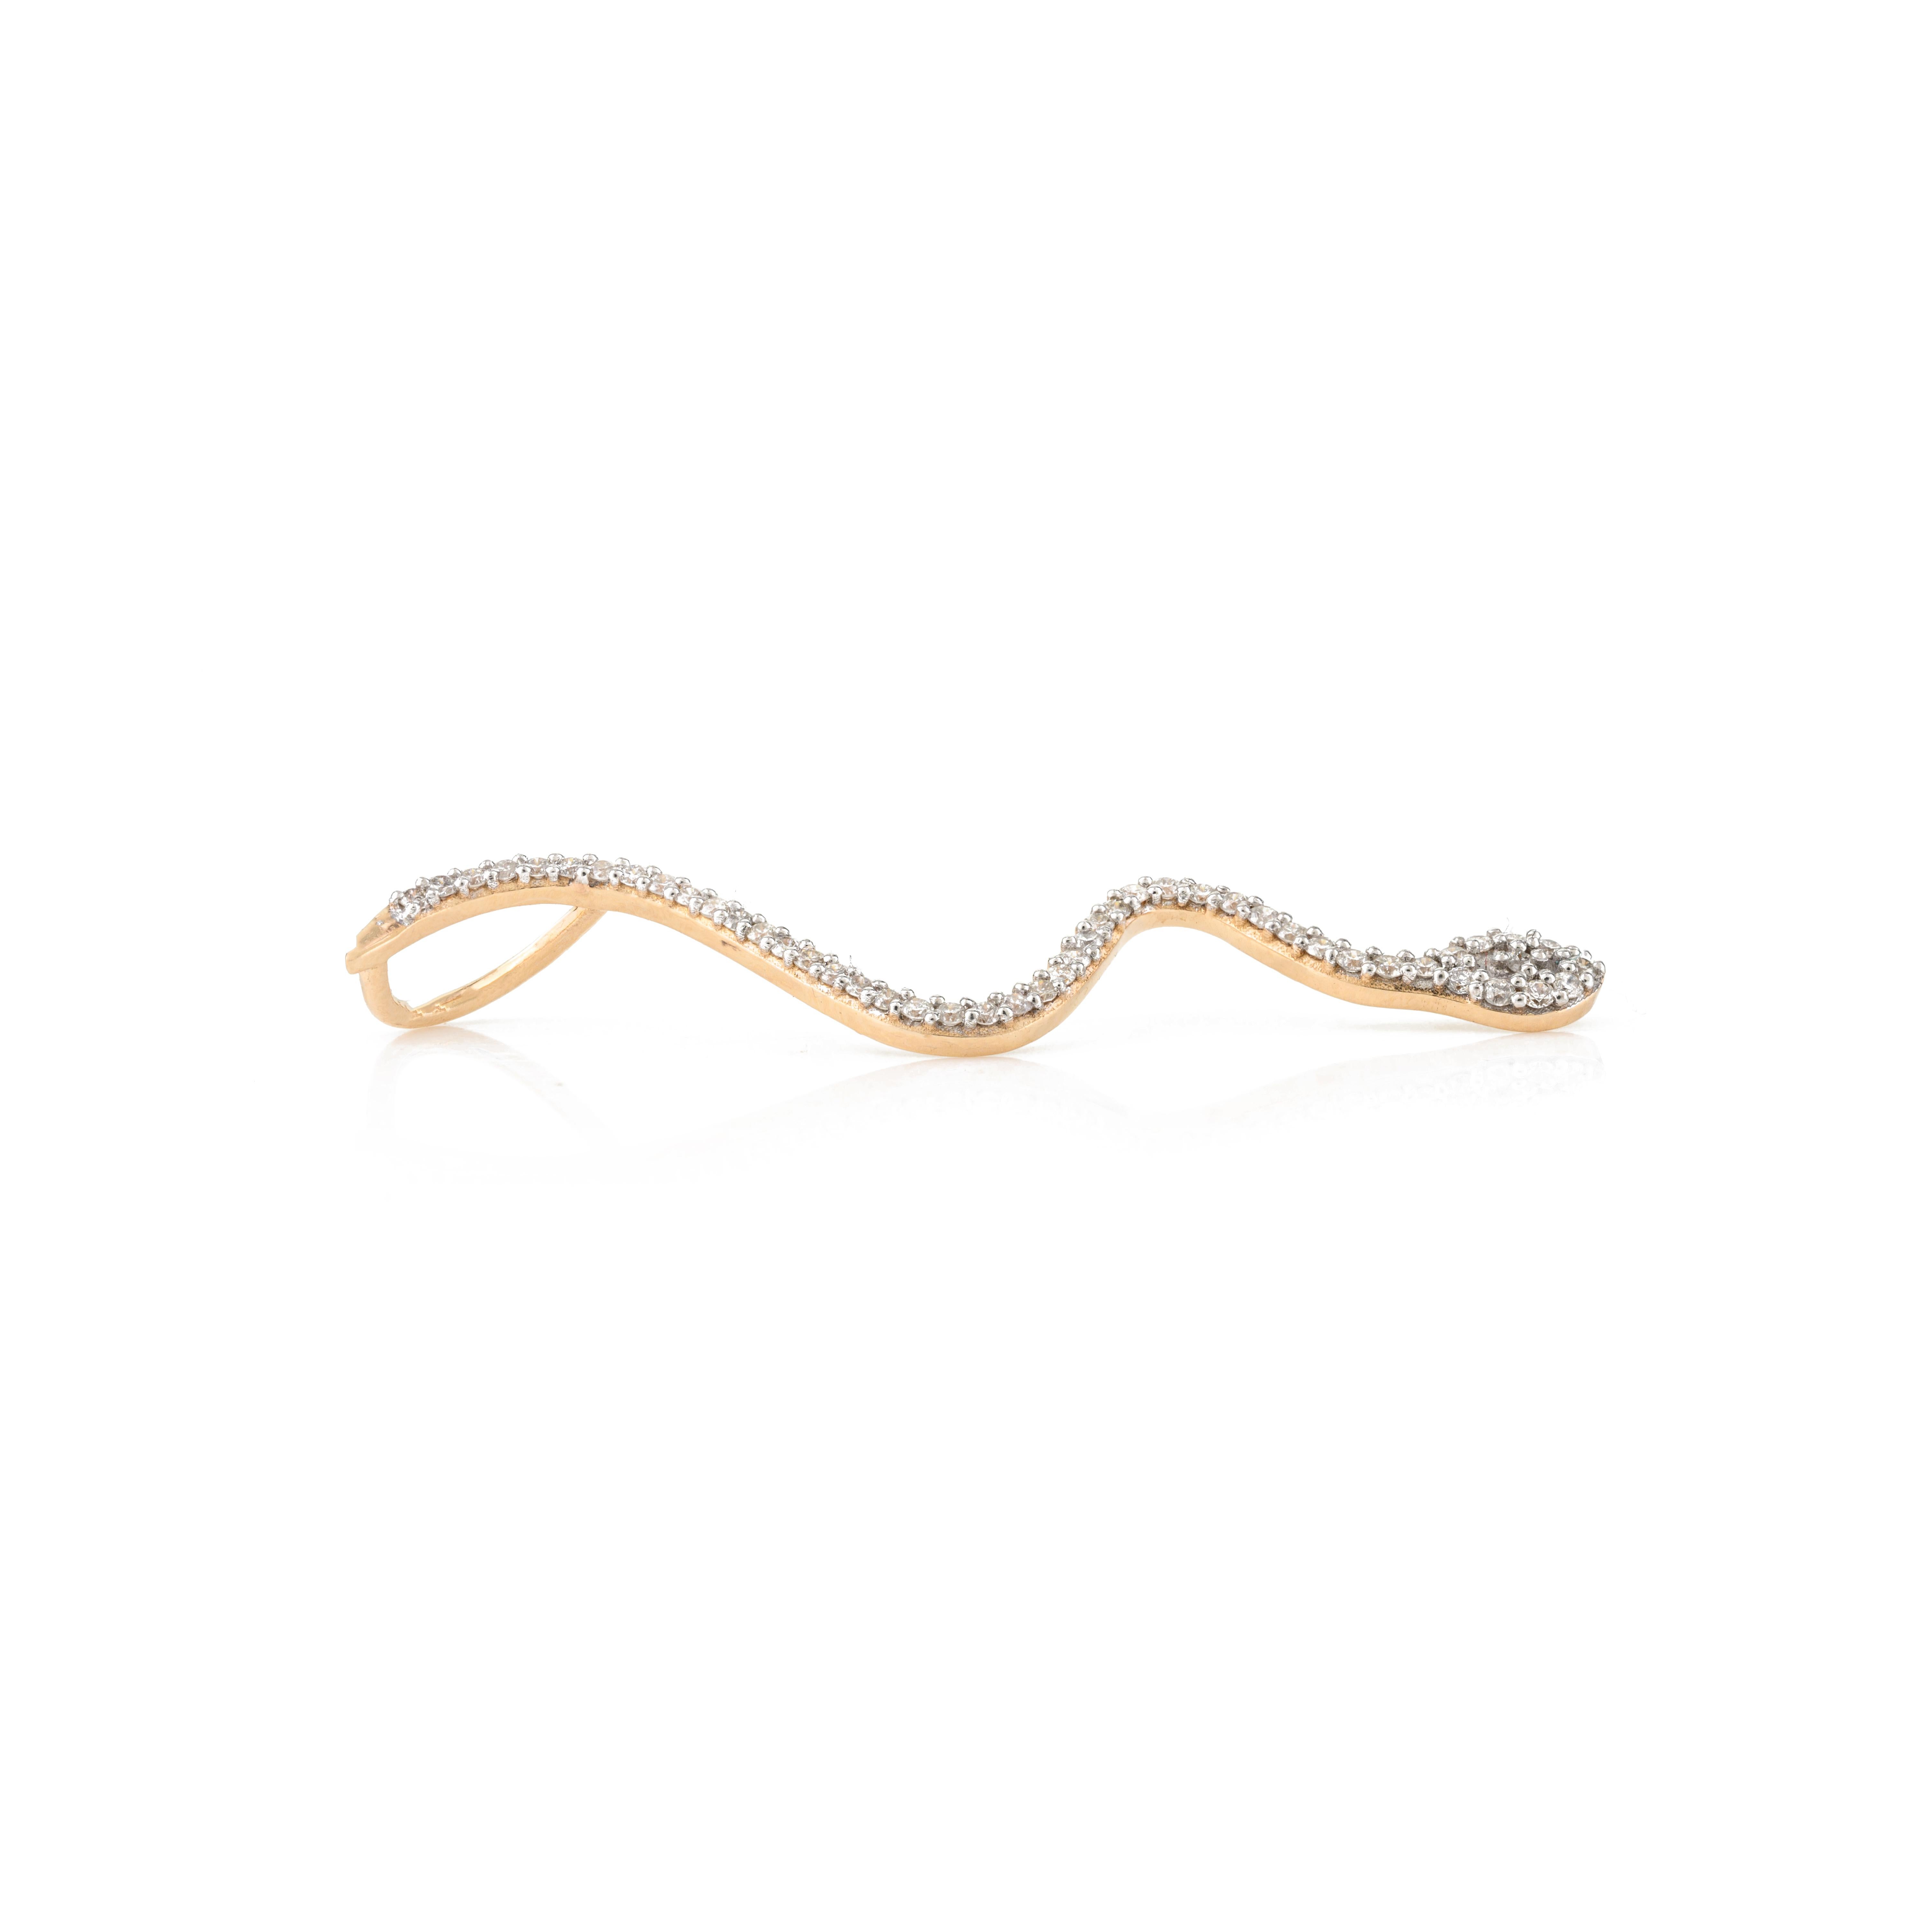 Modernist Minimalist Certified Diamond Serpent Snake 18k Yellow Gold Pendant Necklace